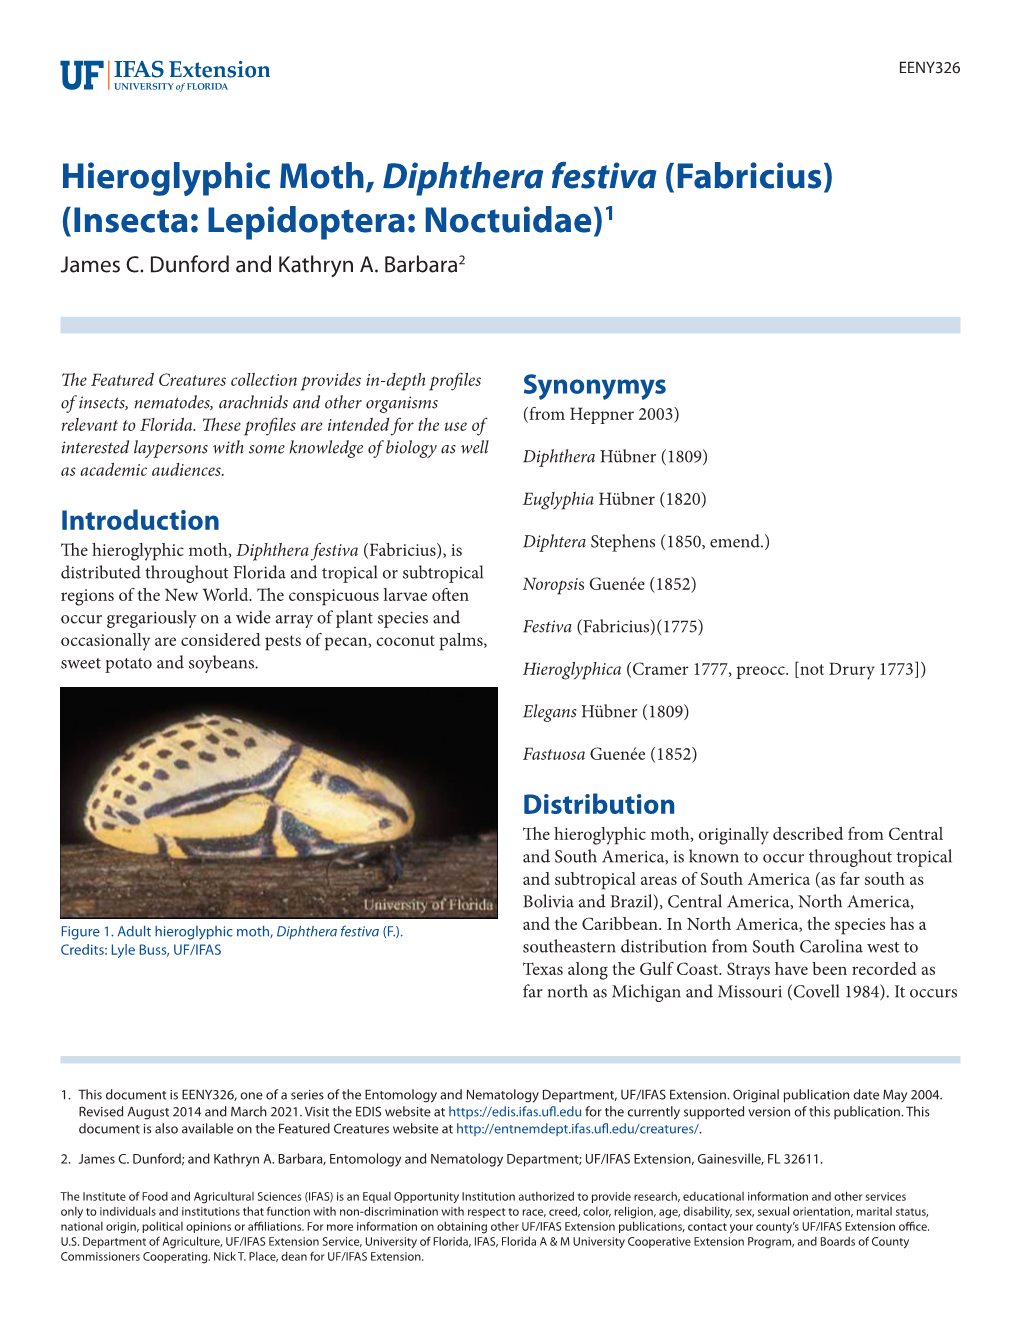 Hieroglyphic Moth, Diphthera Festiva (Fabricius) (Insecta: Lepidoptera: Noctuidae)1 James C